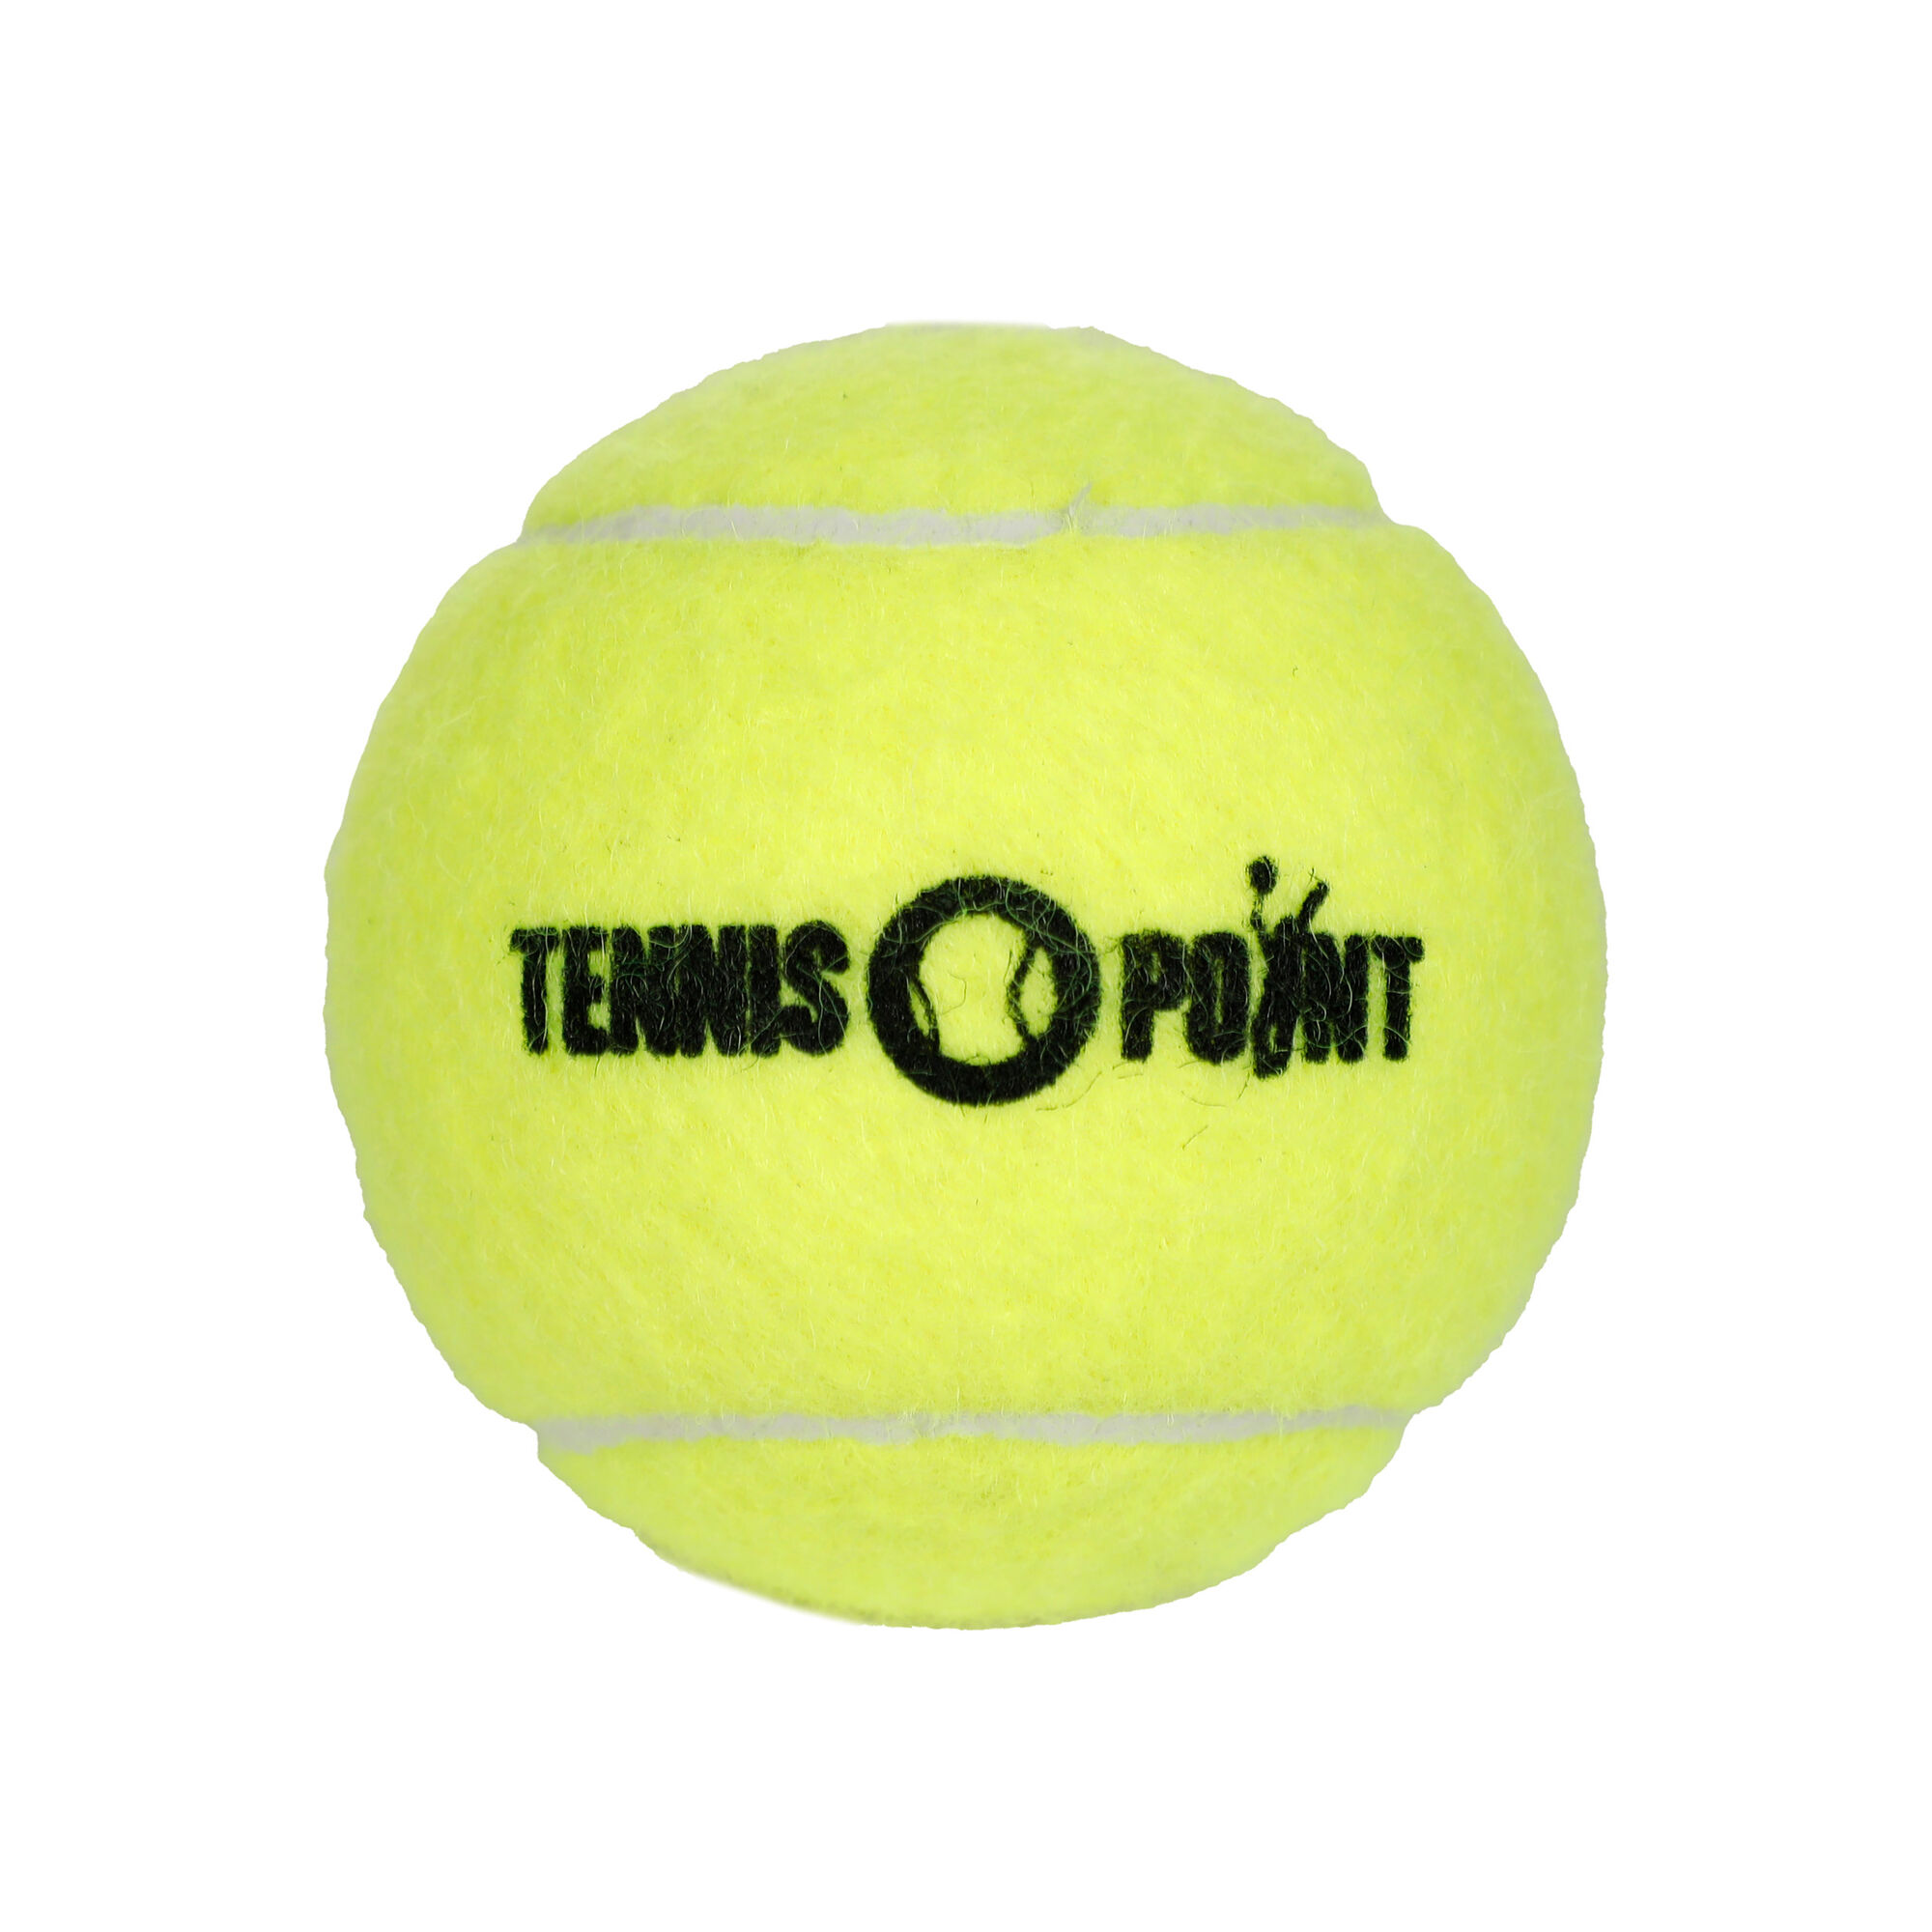 Machine lance balle tennis - Confirmé